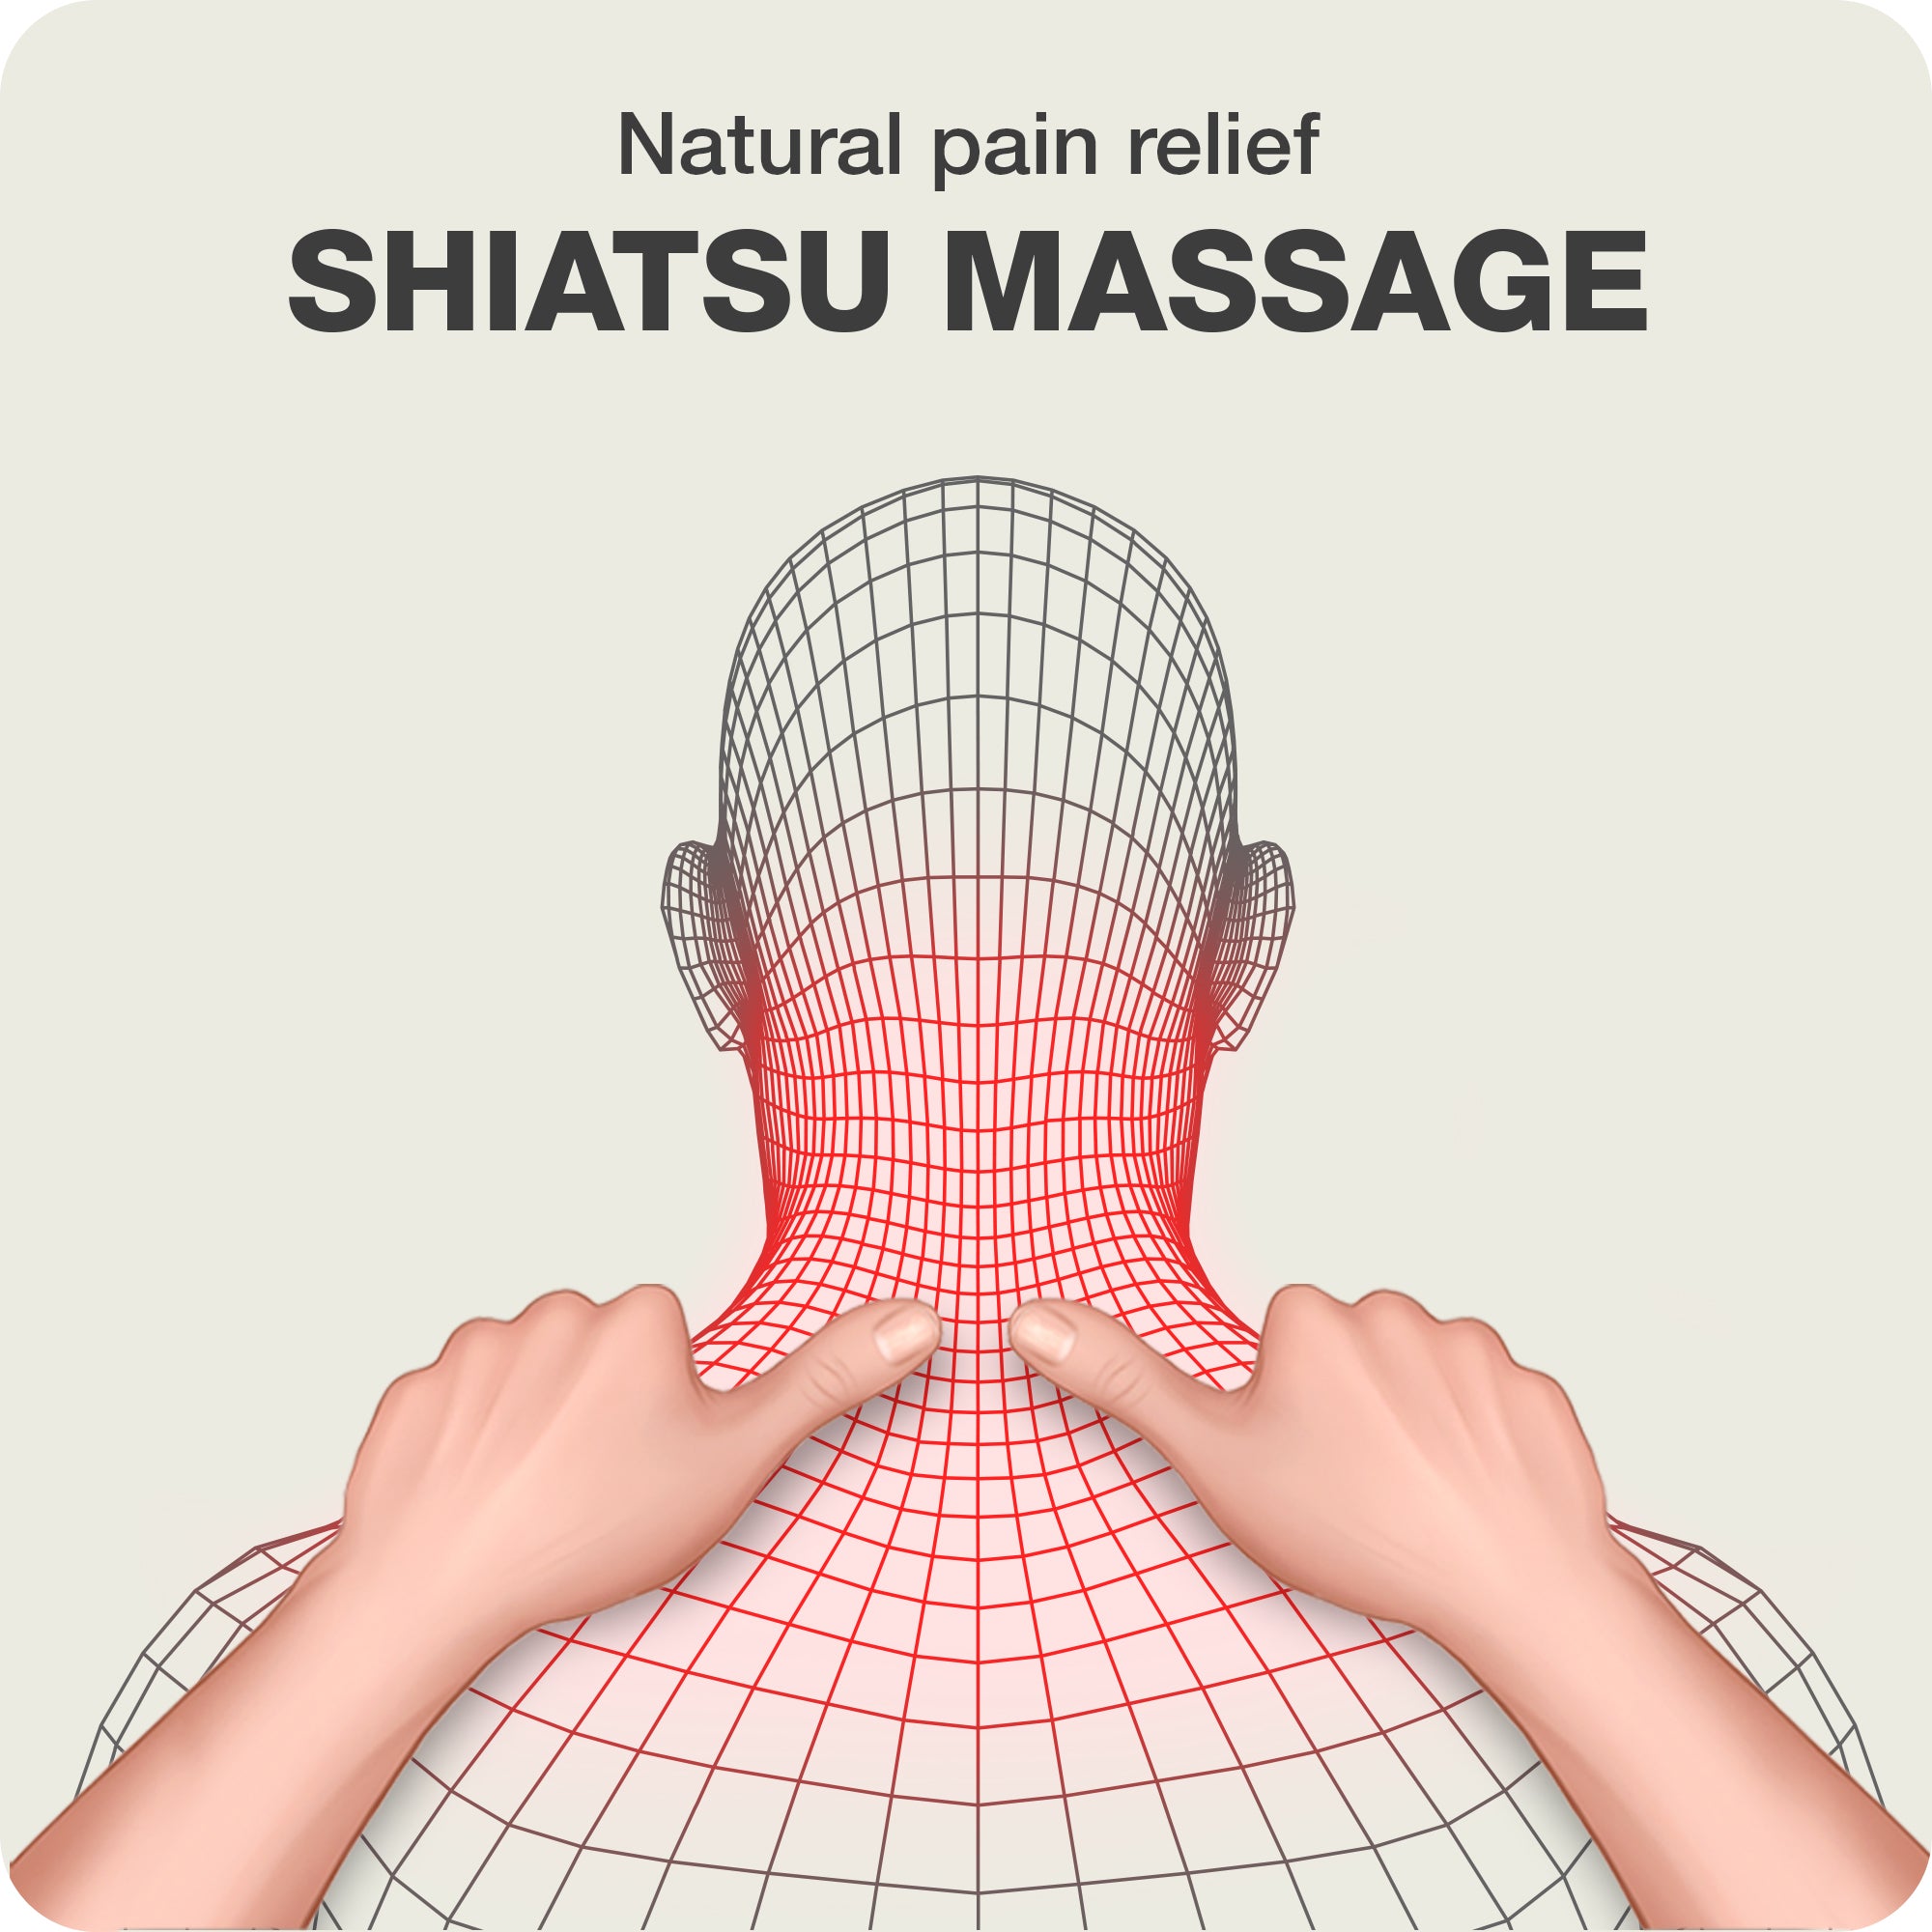 shiatsu massage performed by human hands